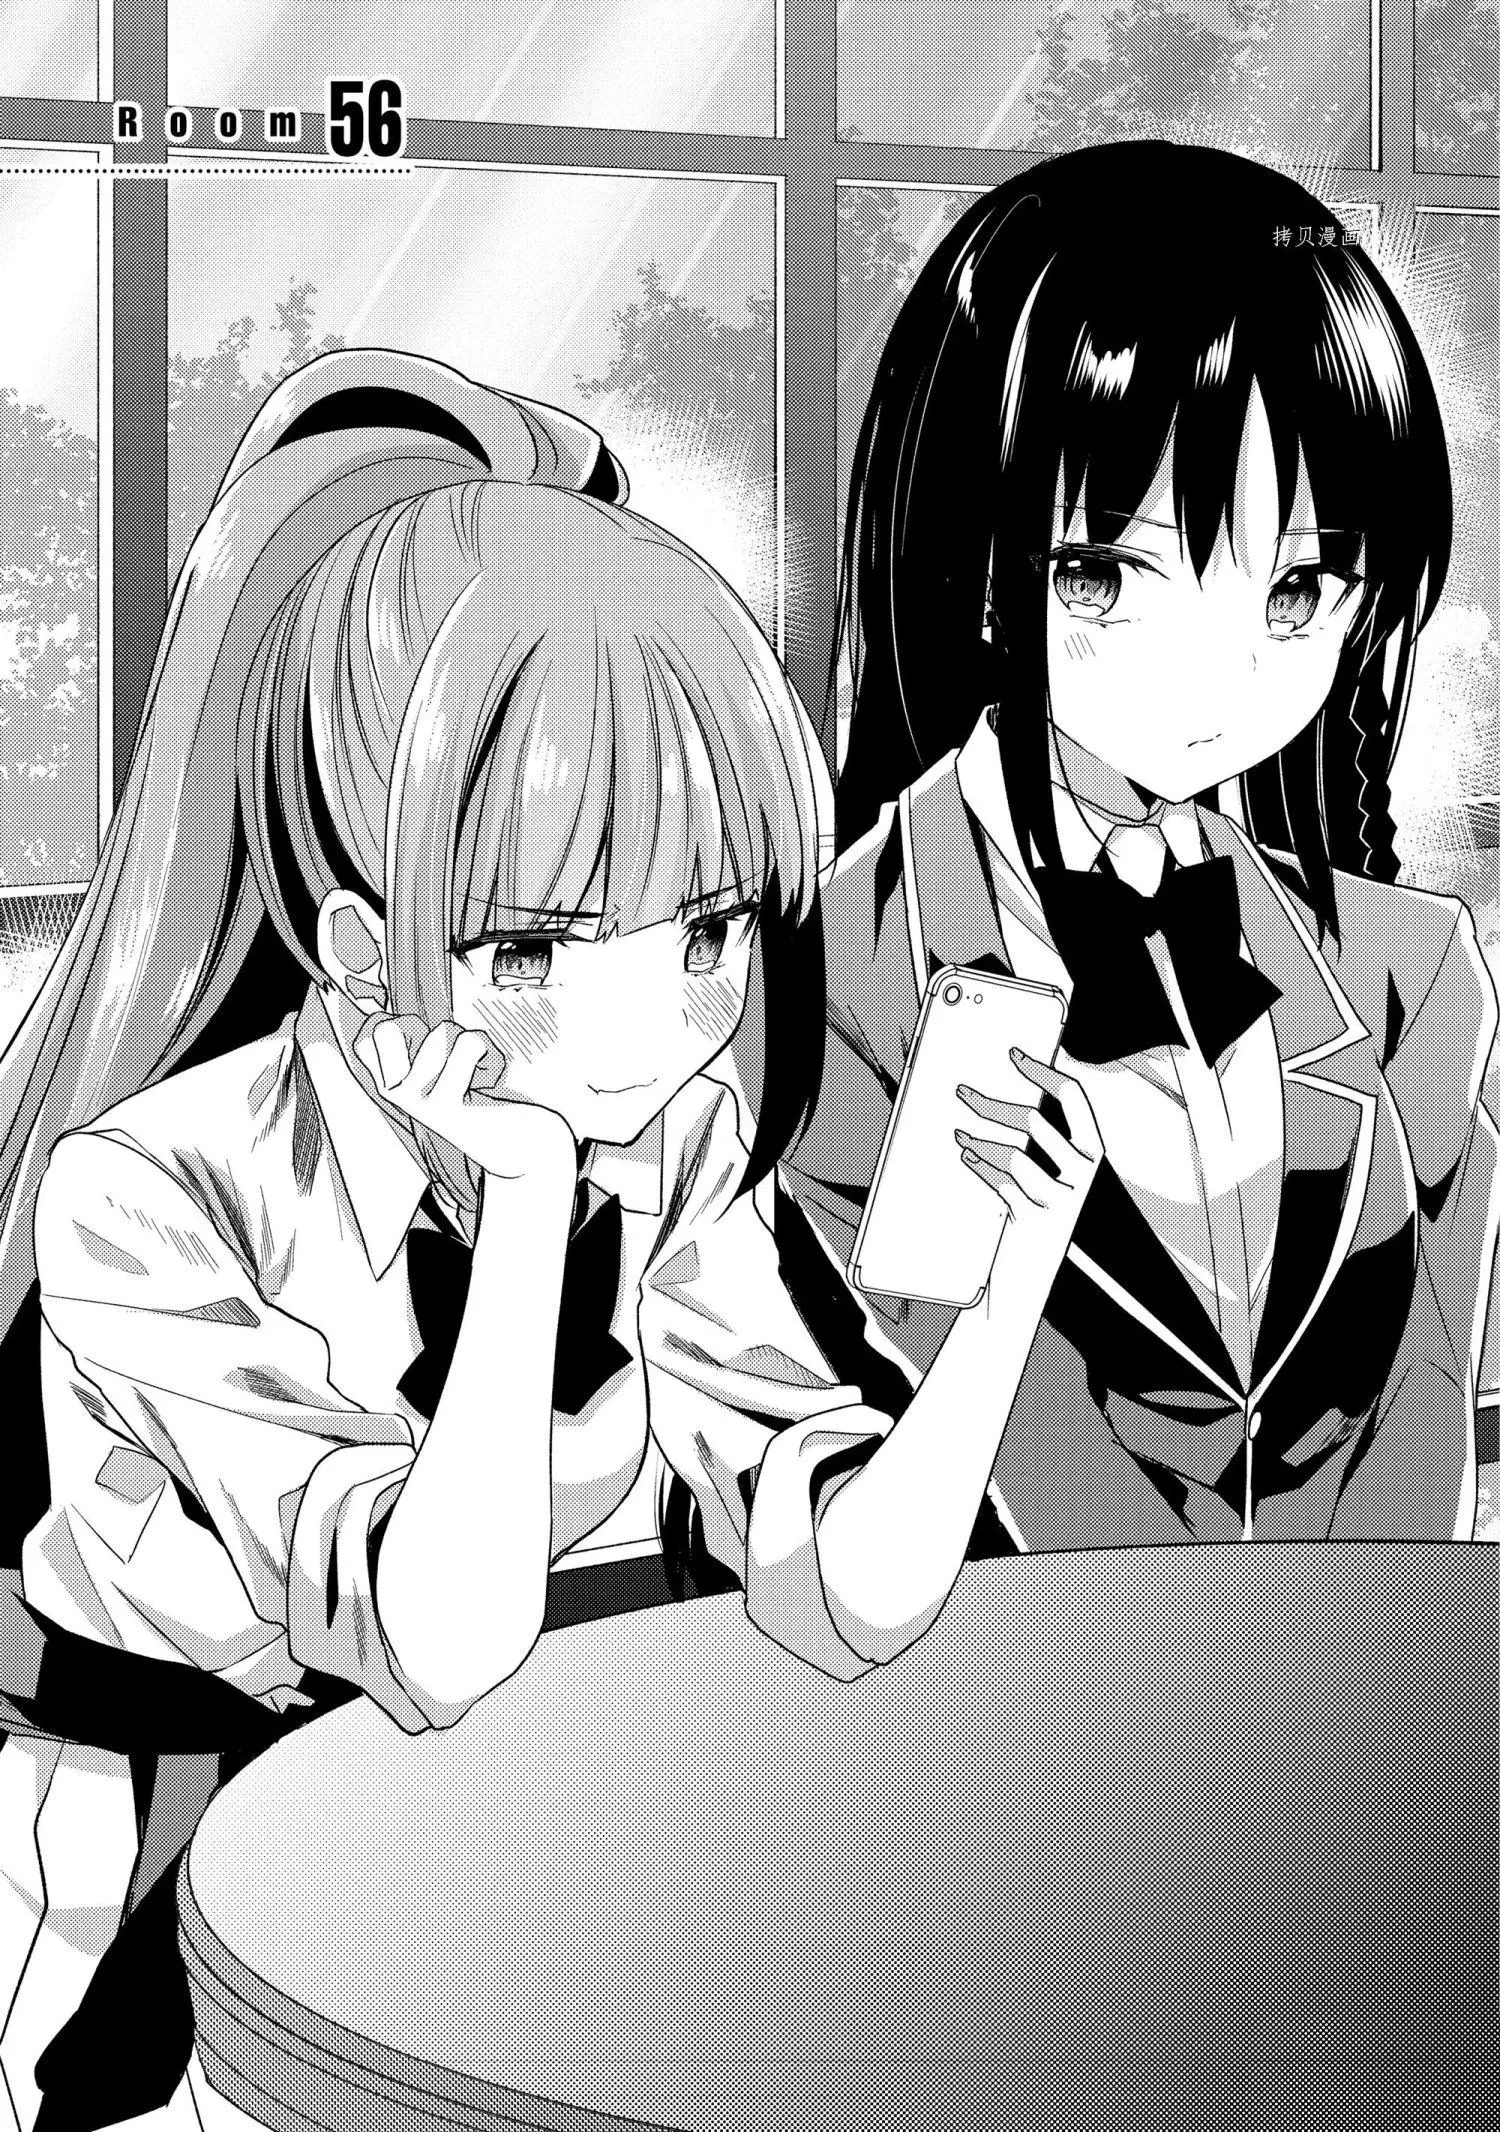 Classroom of the Elite, Chapter 70 - Classroom of the Elite Manga